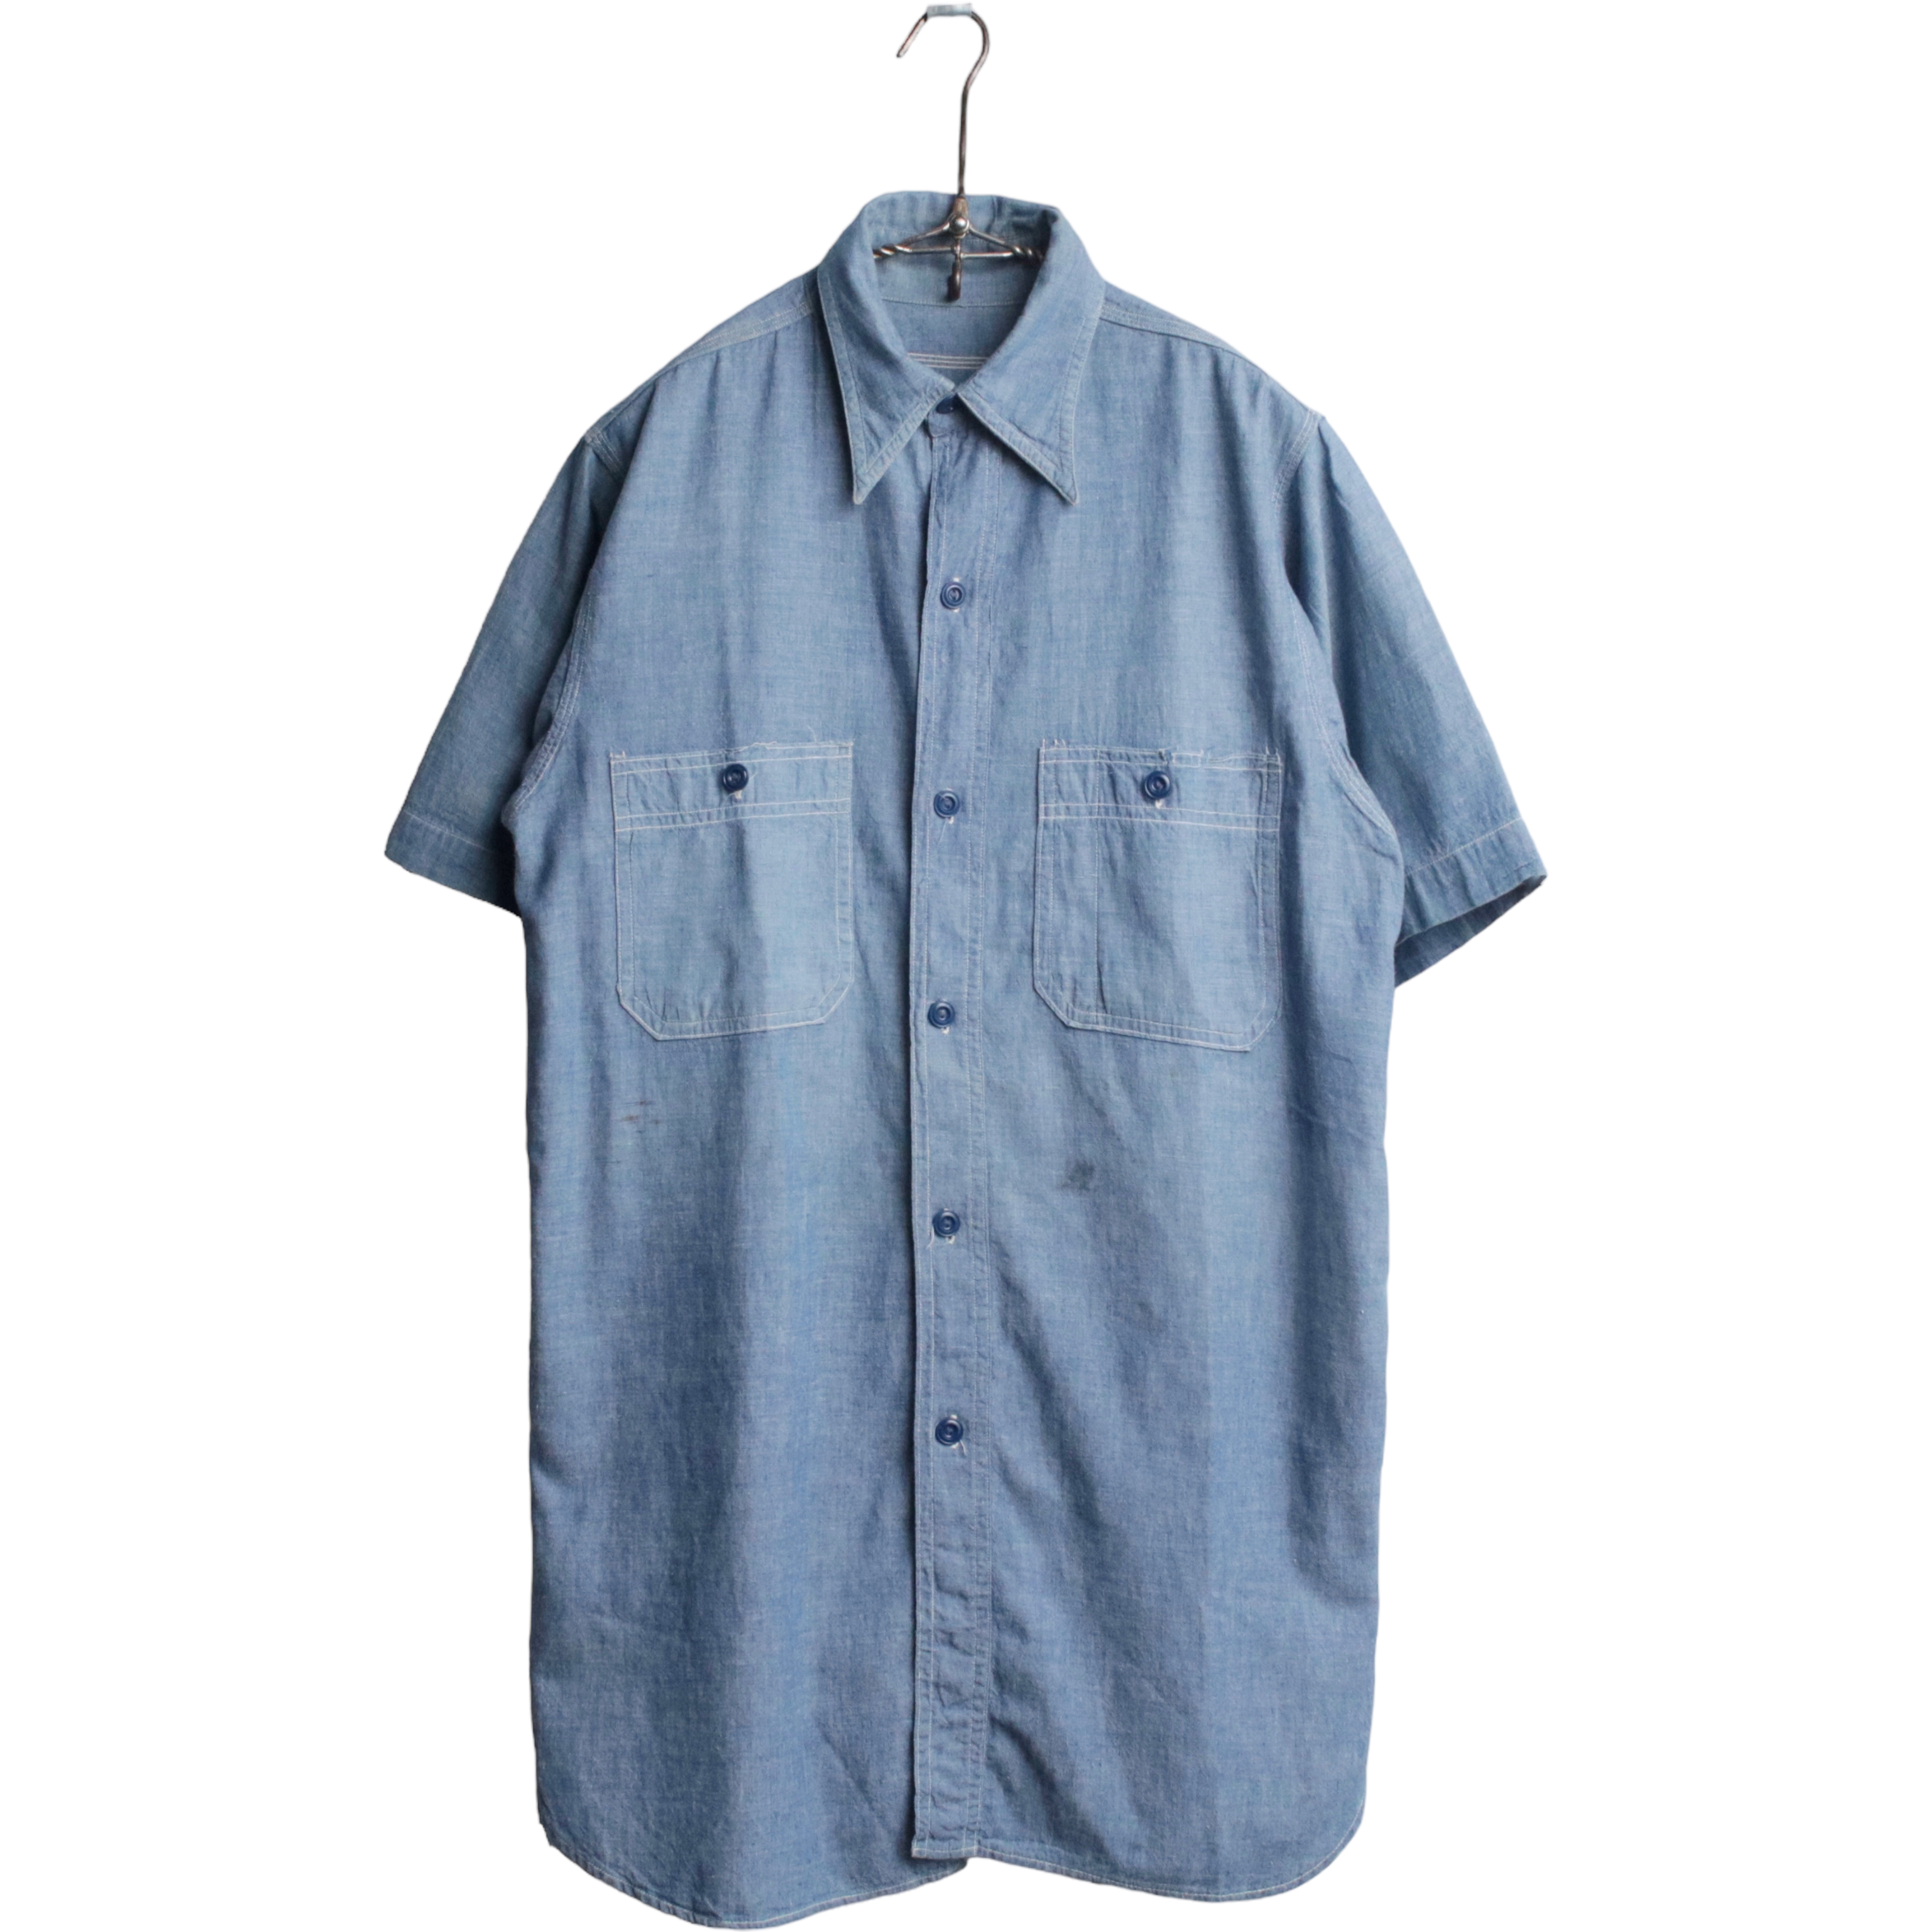 40s50s オリジナル半袖 シャンブレーシャツ マチ付き ダブル襟 ロングポイント ステンシル 15-15 1/2程